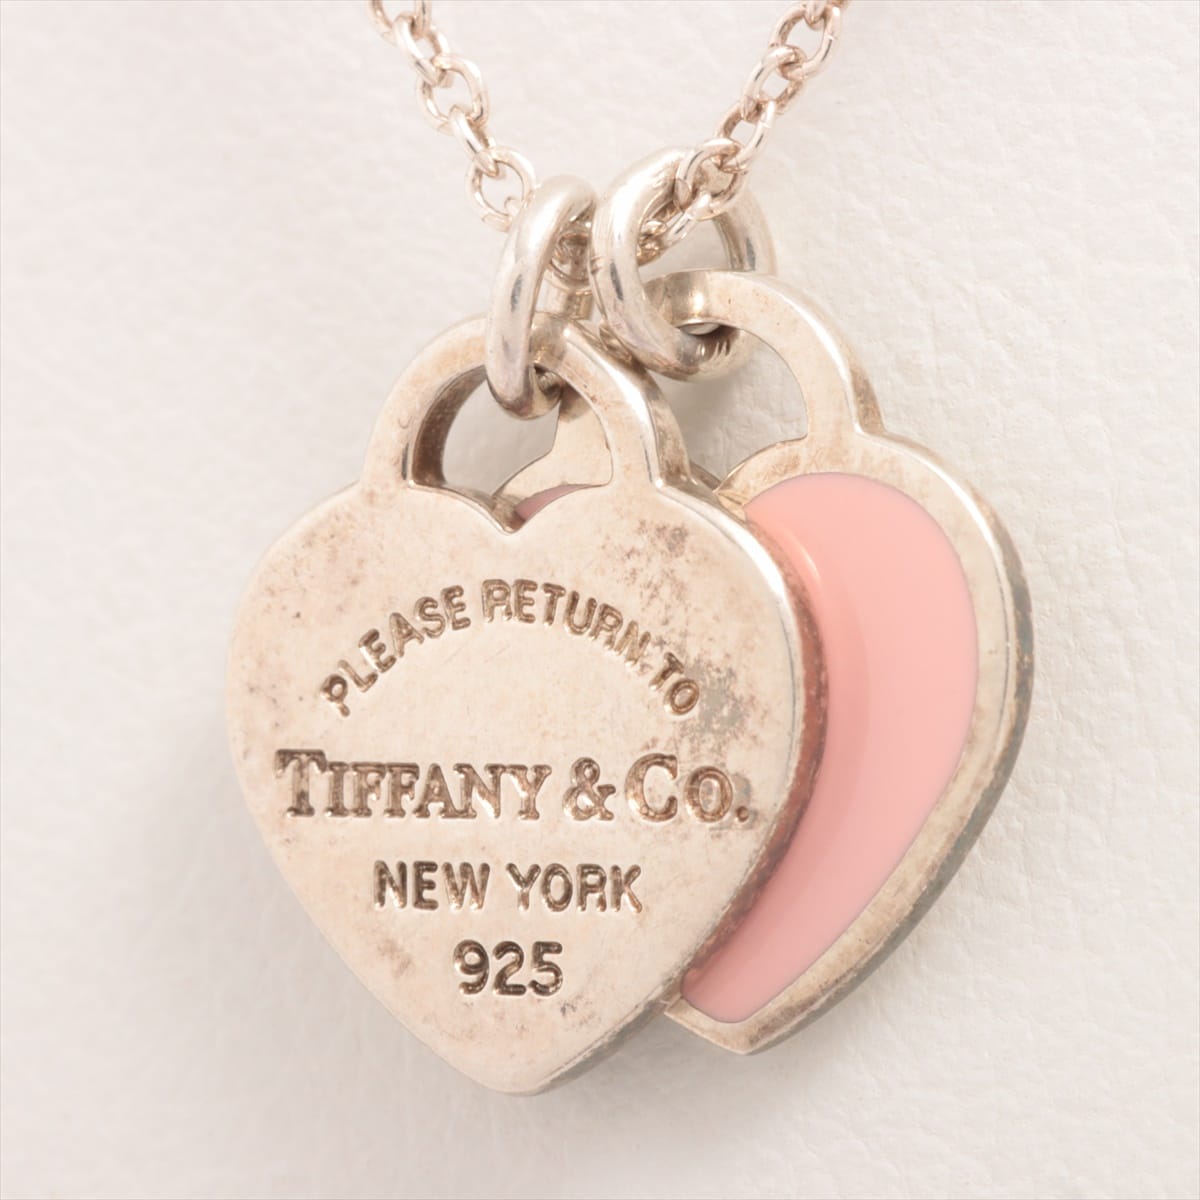 Tiffany Return To Tiffany Mini Double Heart Tag Necklace 925 2.7g Silver